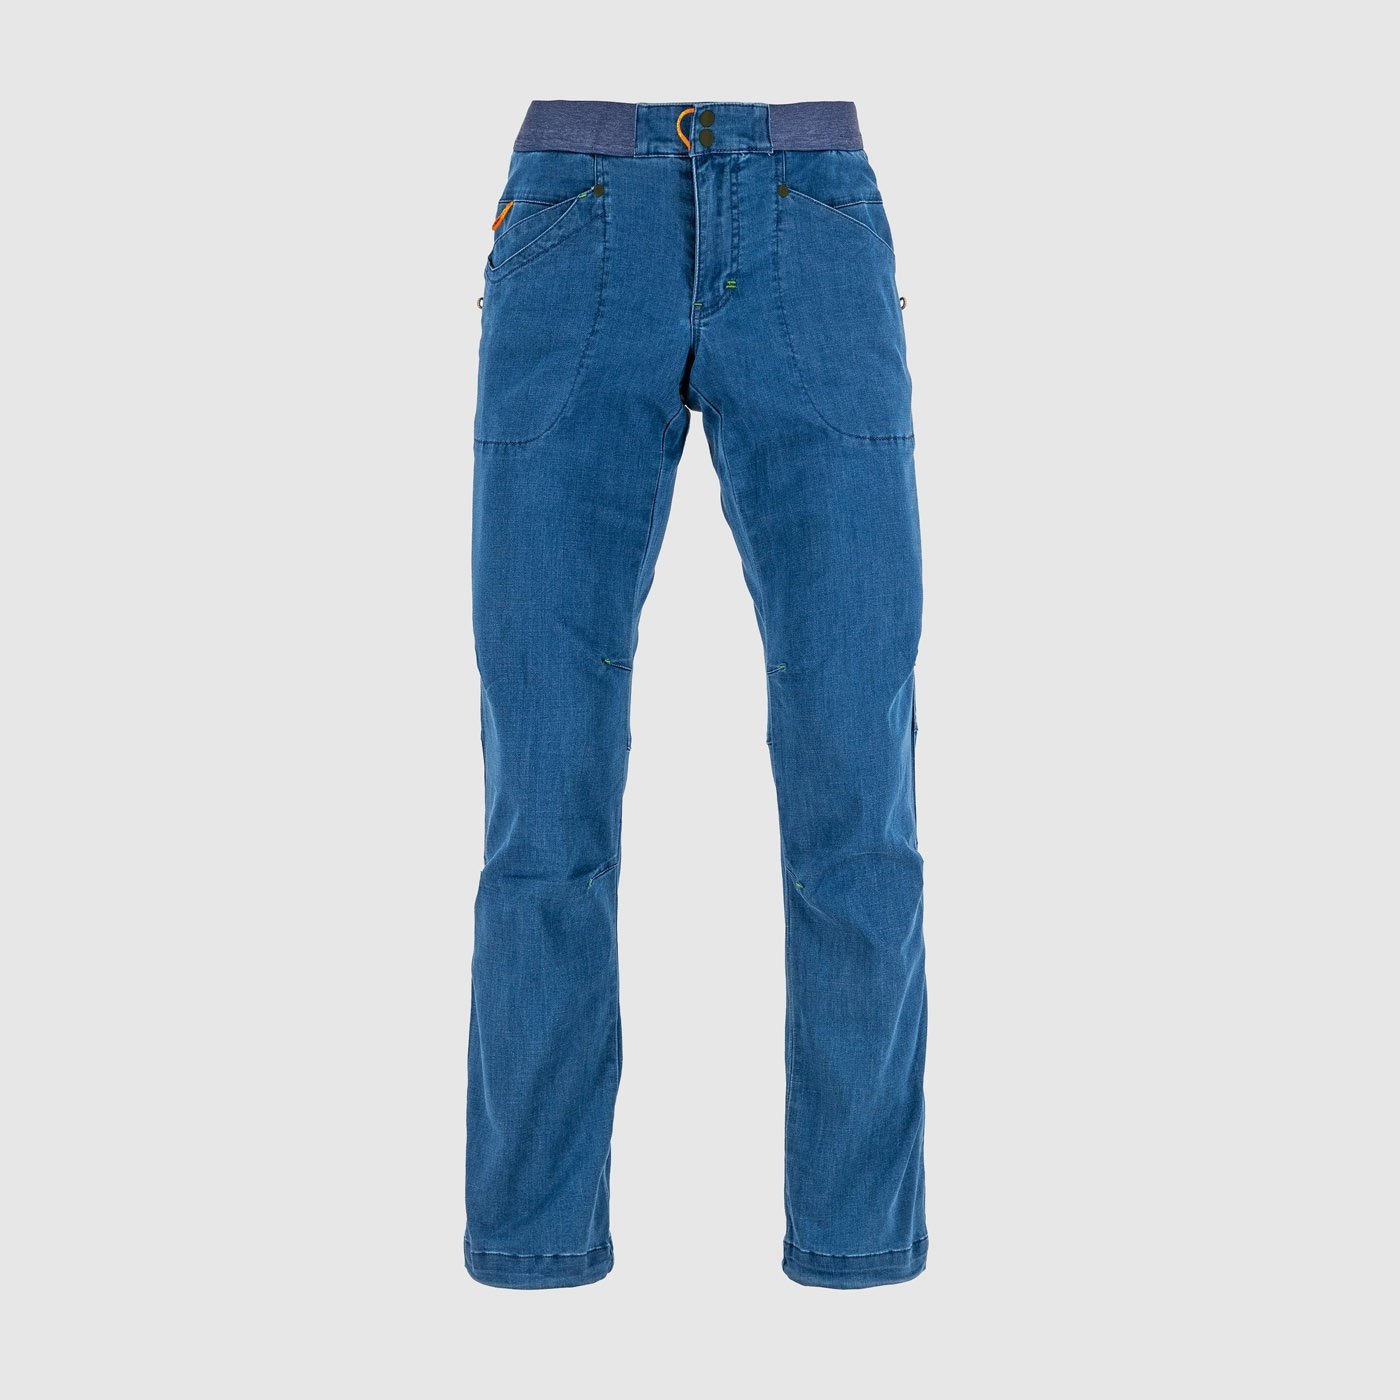 KARPOS M Noghera Jeans Pants, Light Blue Jeans (vzorek) velikost: 46